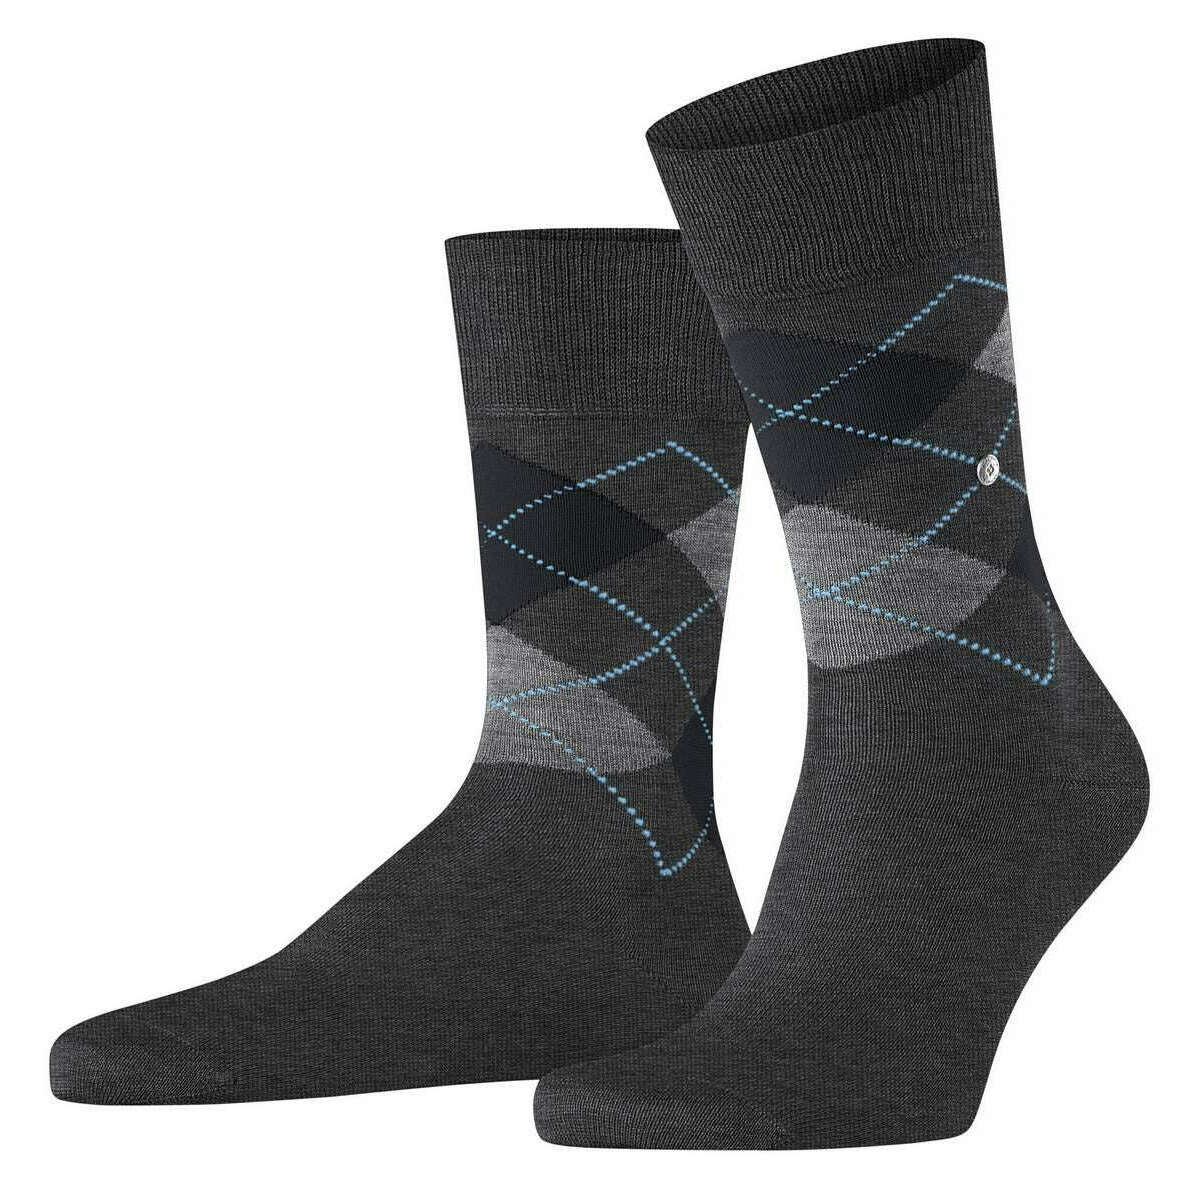 Burlington Manchester Socks - Anthracite Grey/Black